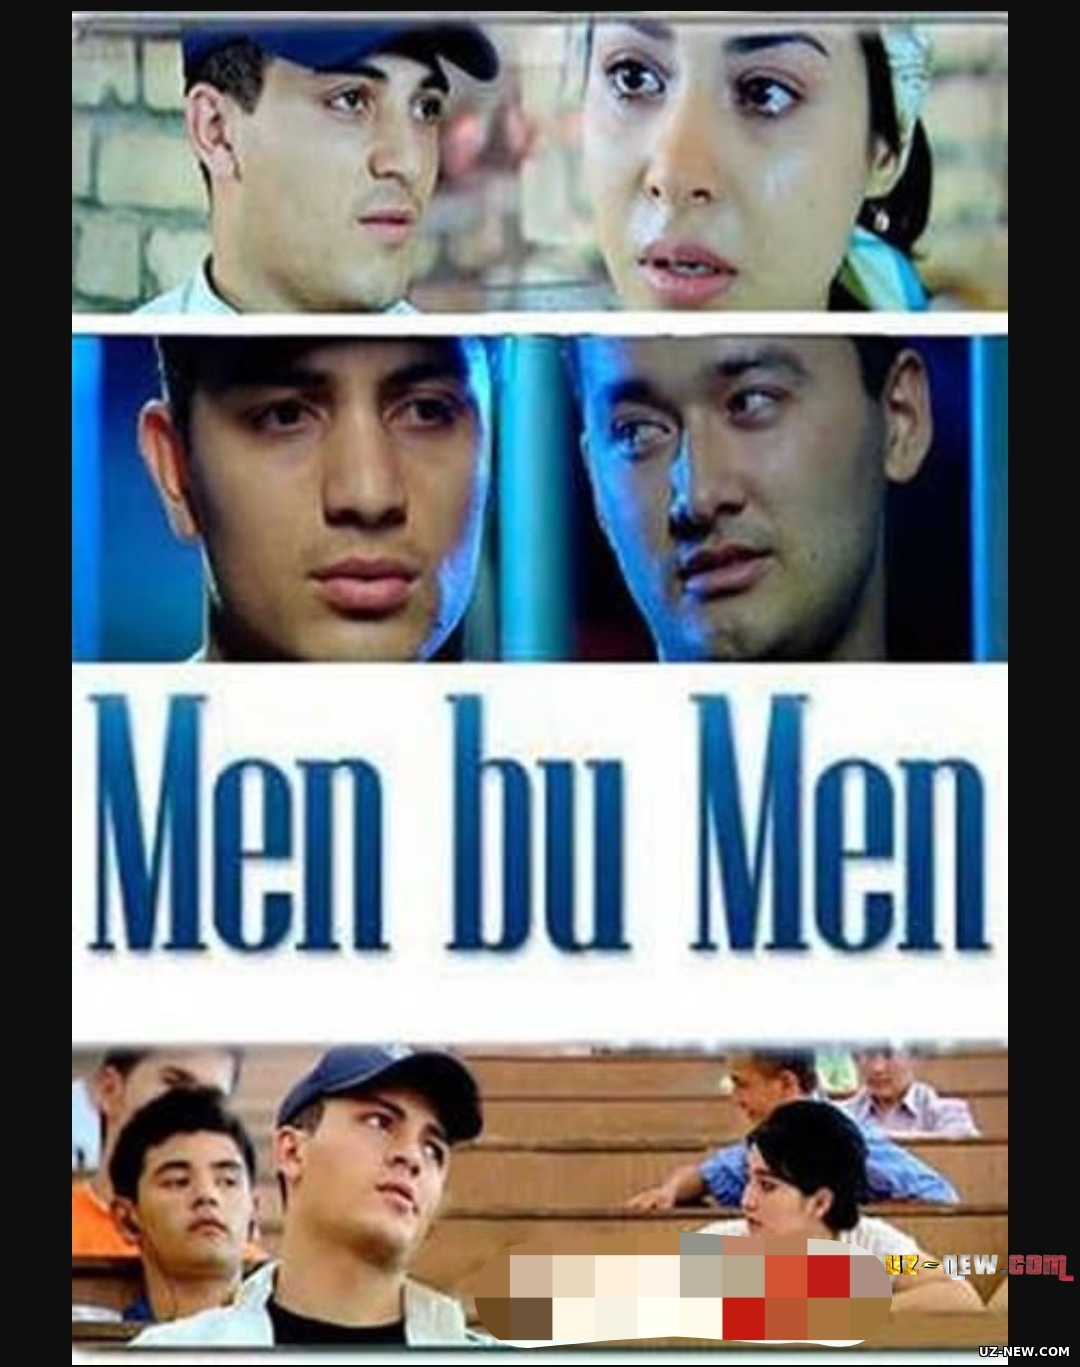 Men bu men (o'zbek film)